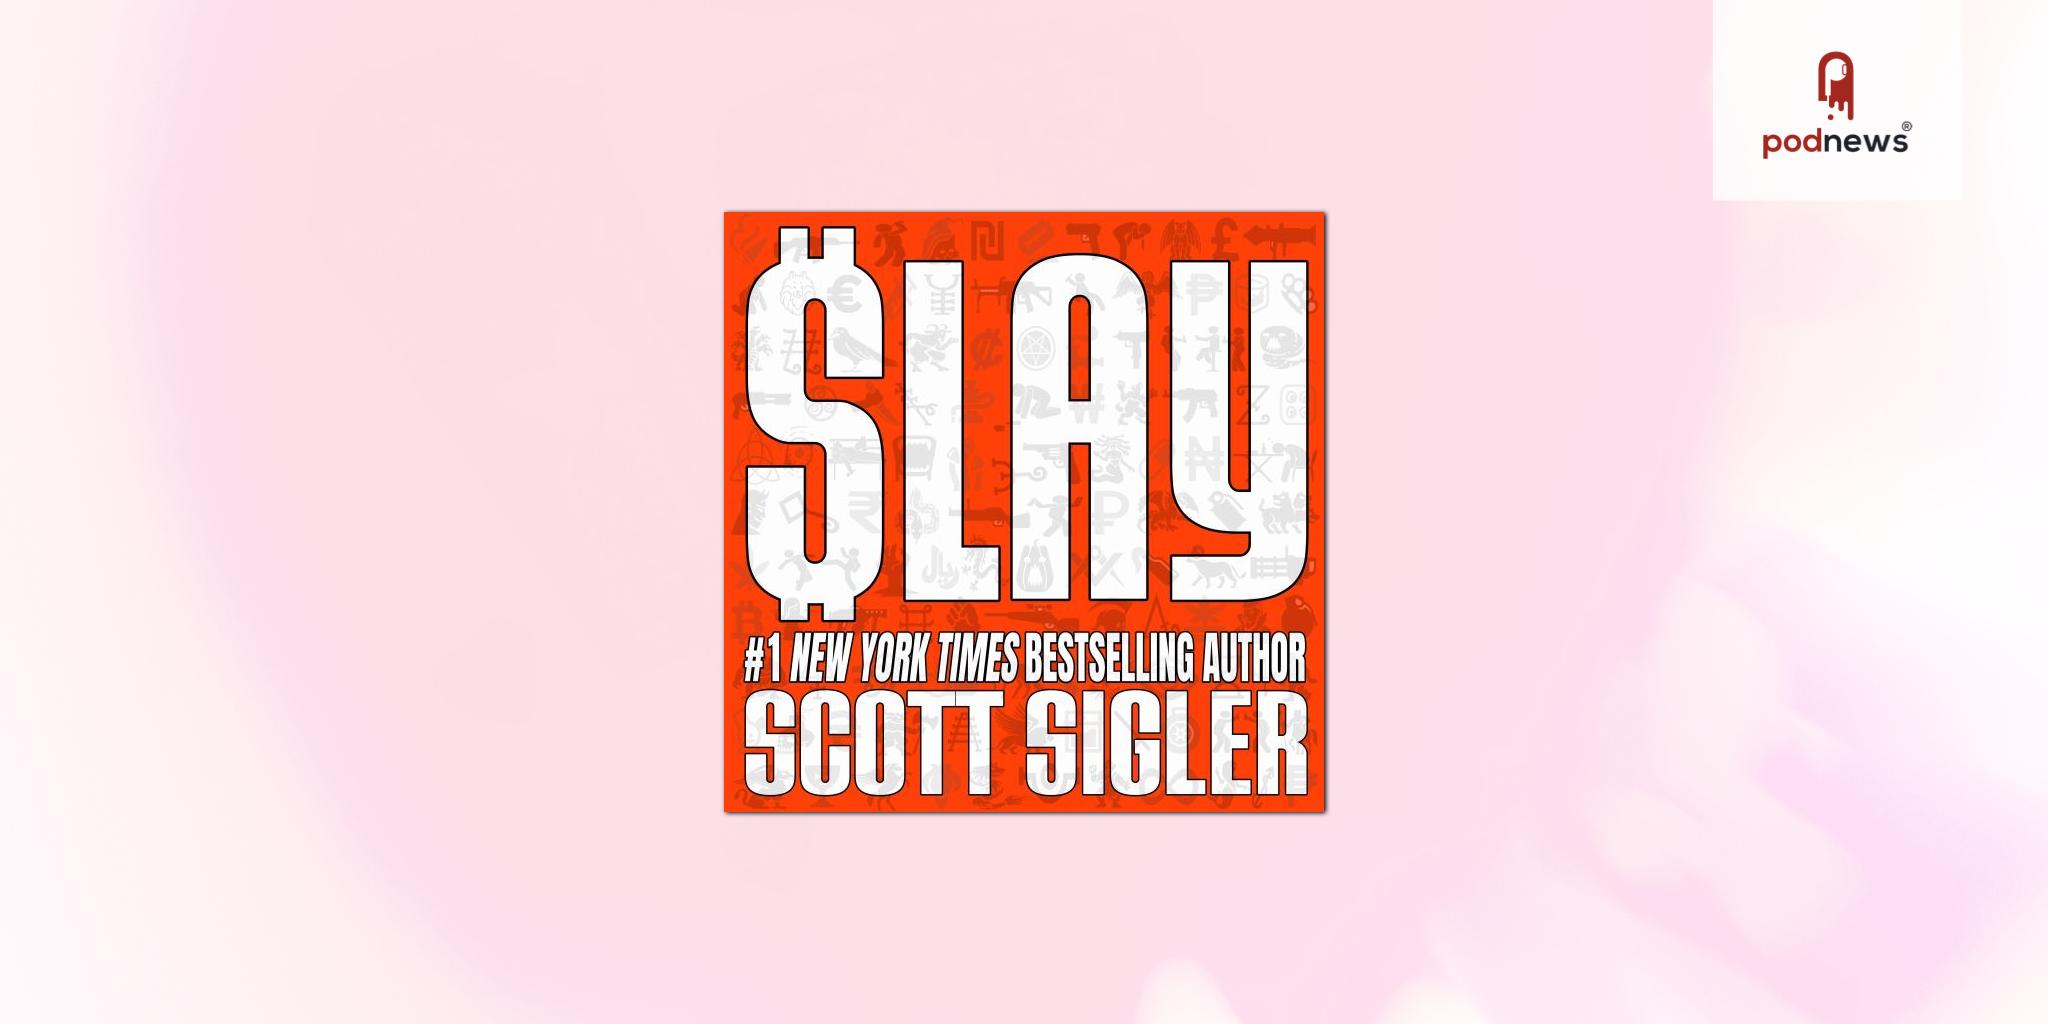 NY Times bestseller Scott Sigler joins Realm Podcast Network